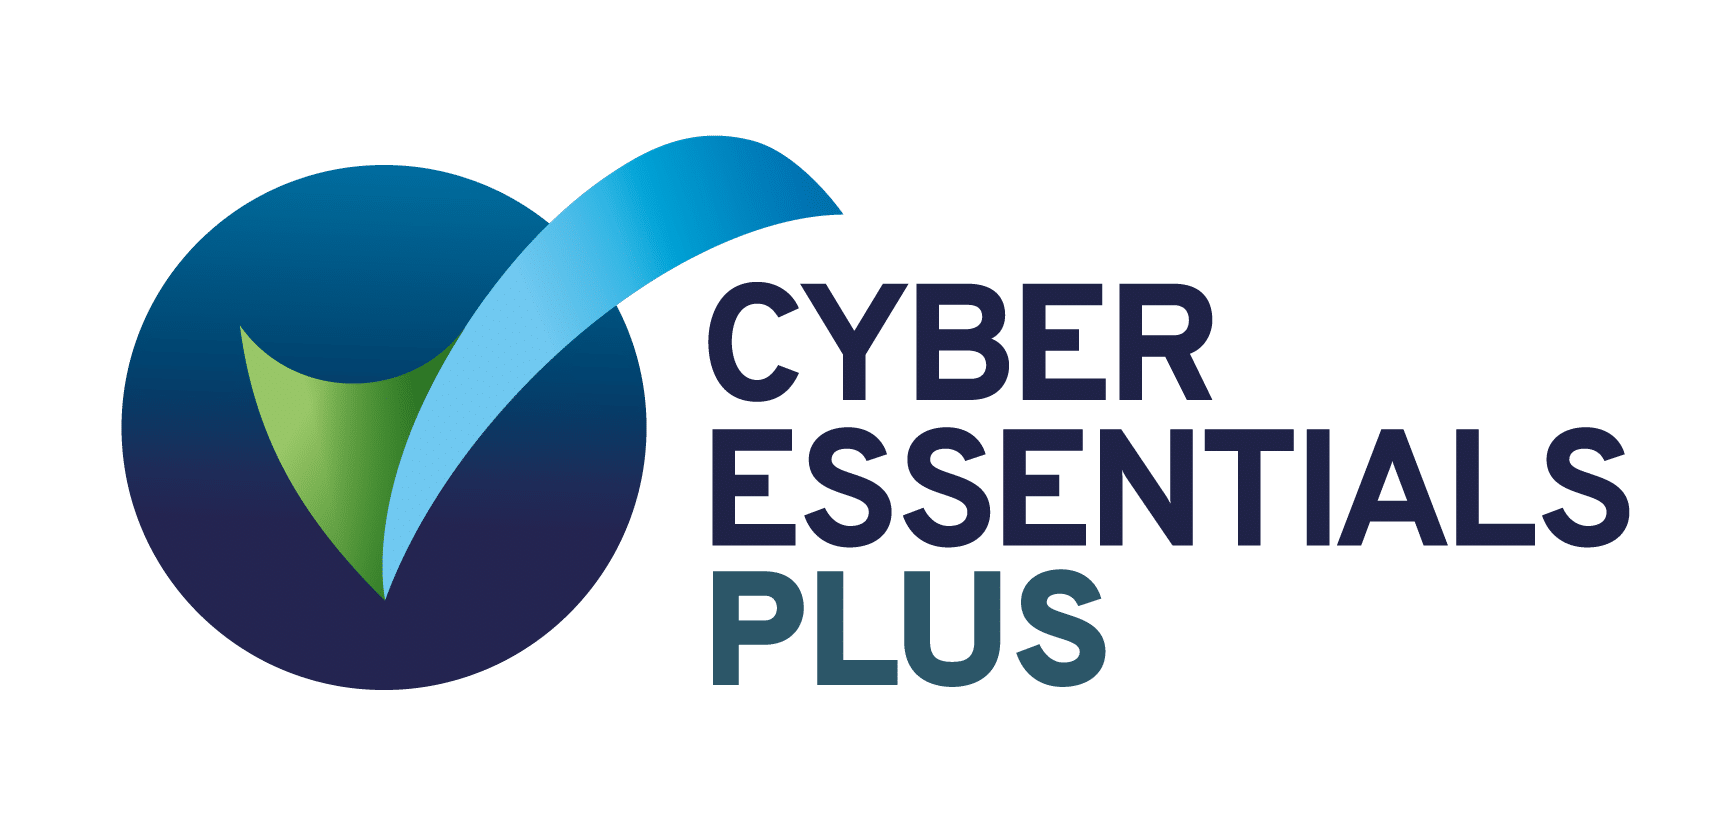 Cyber Essentials Plus Full Colour Header logo